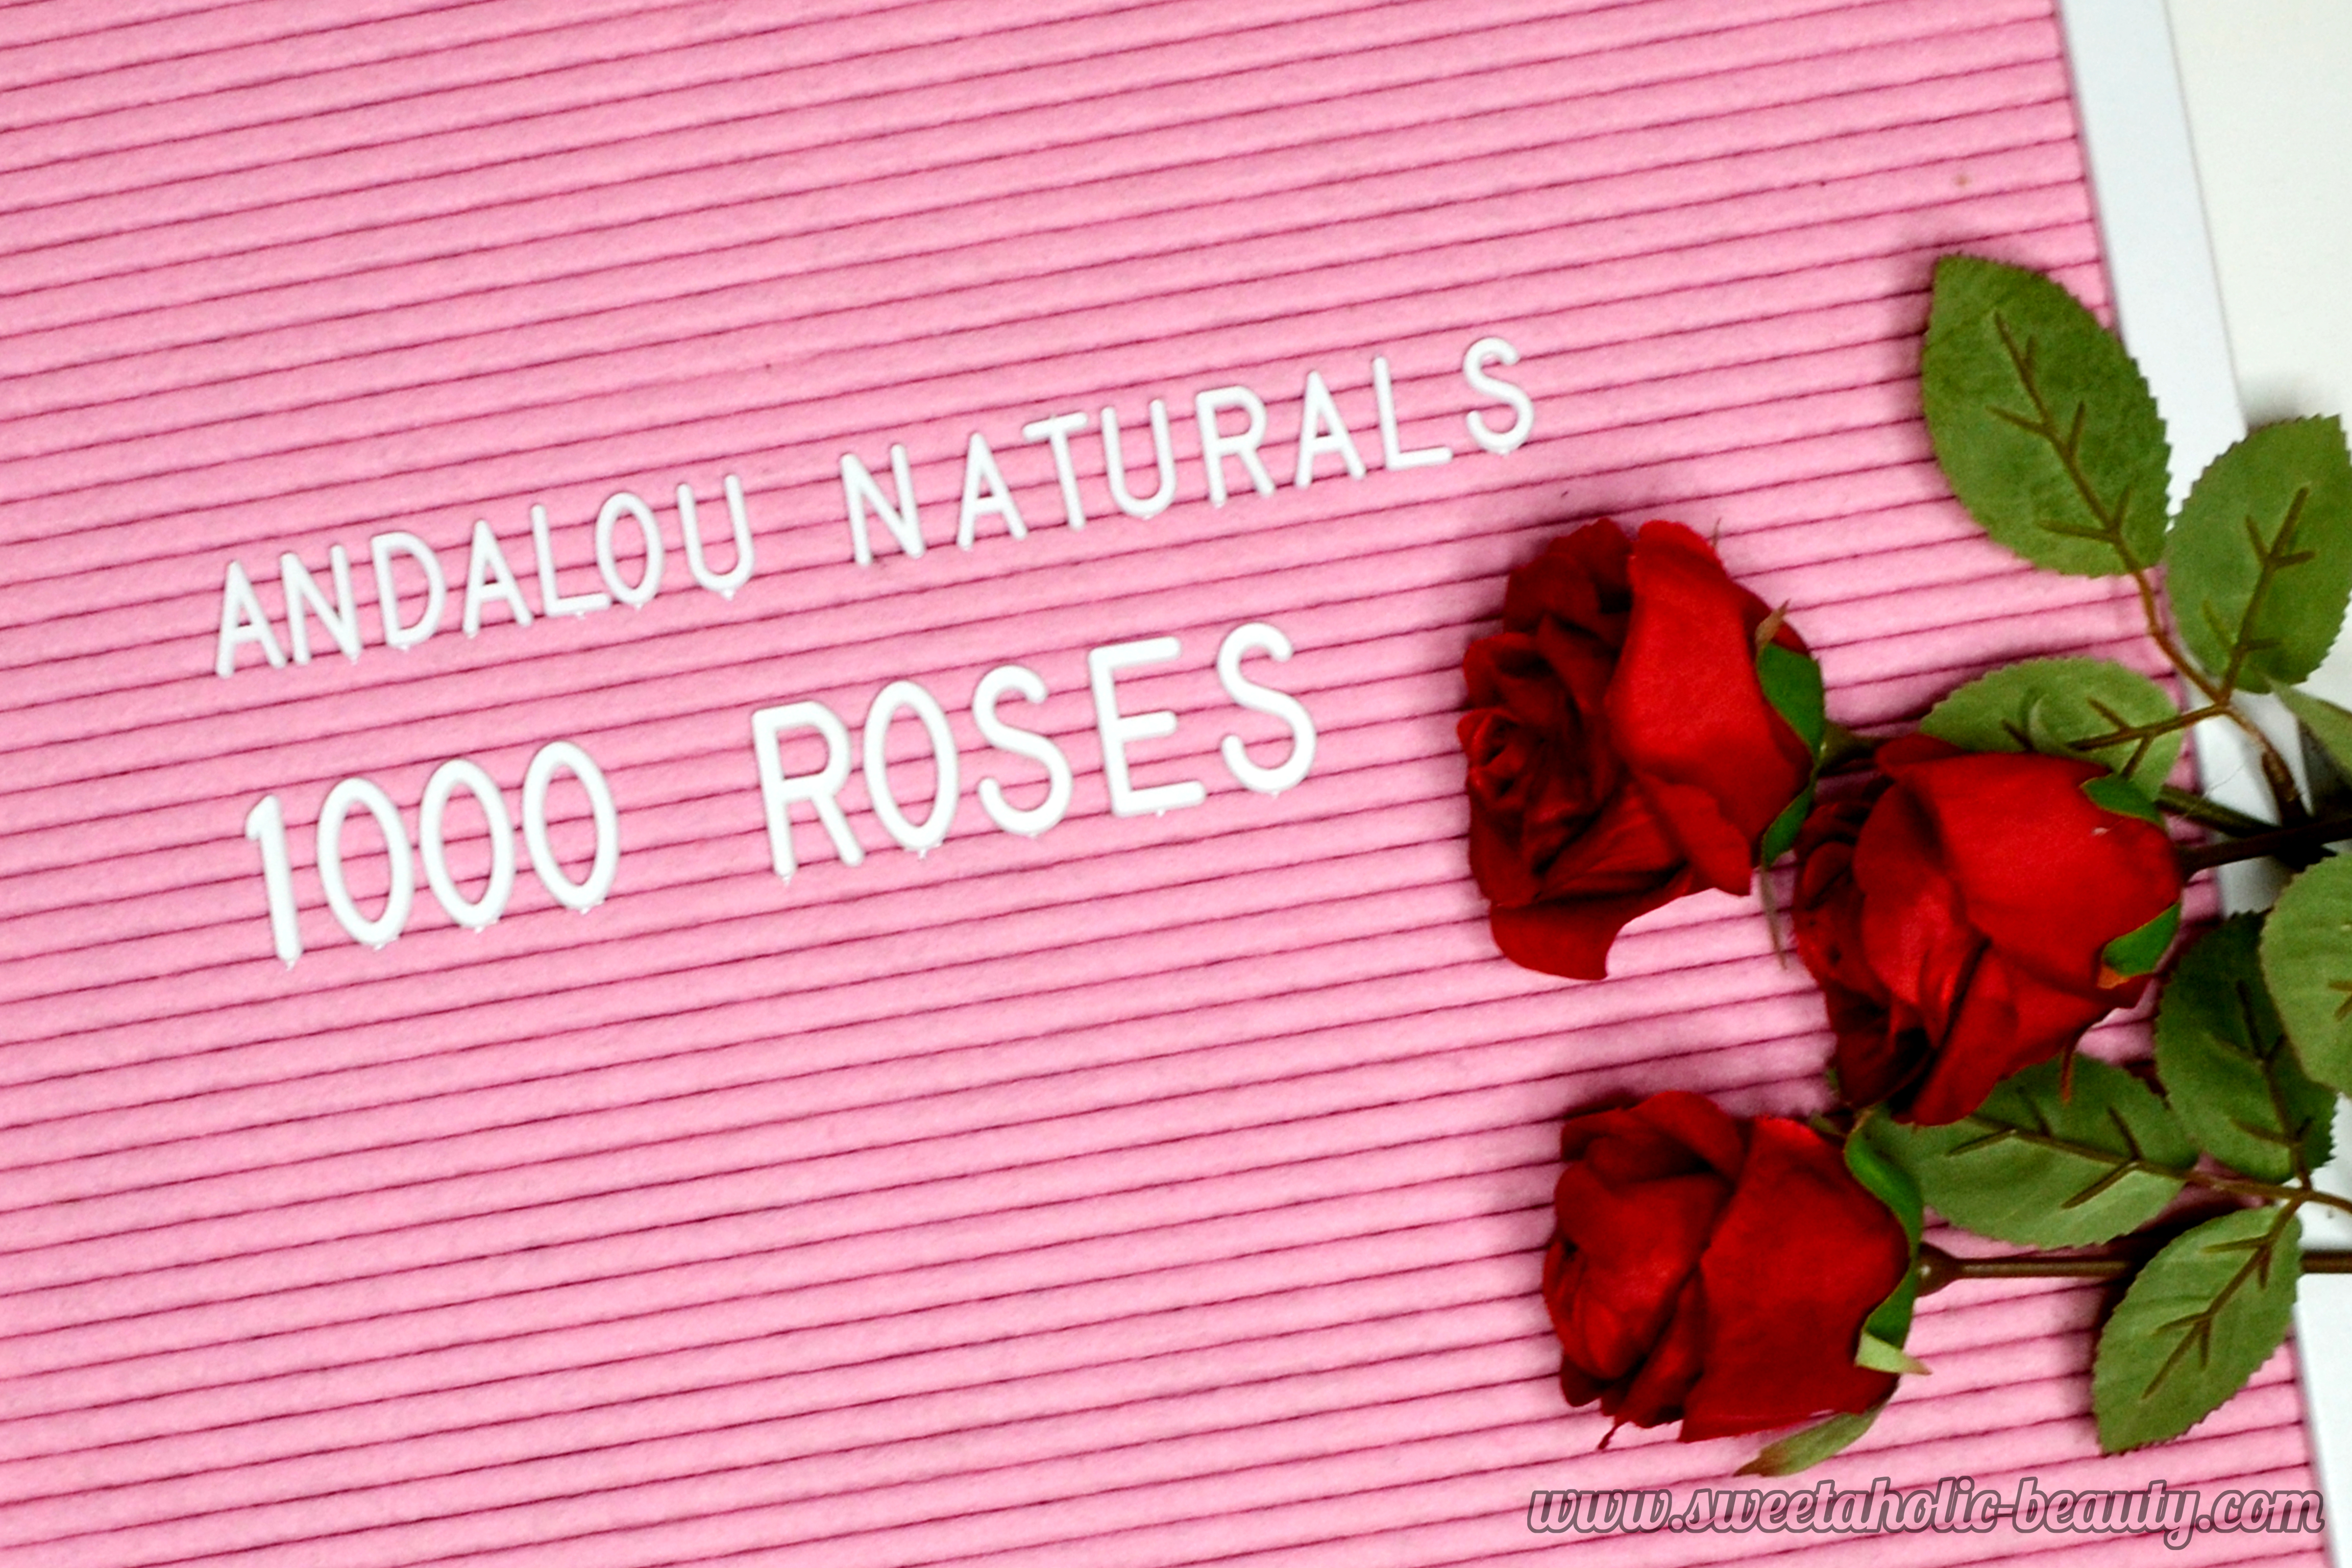 Andalou Naturals 1000 Roses Range - Full Review - Sweetaholic Beauty